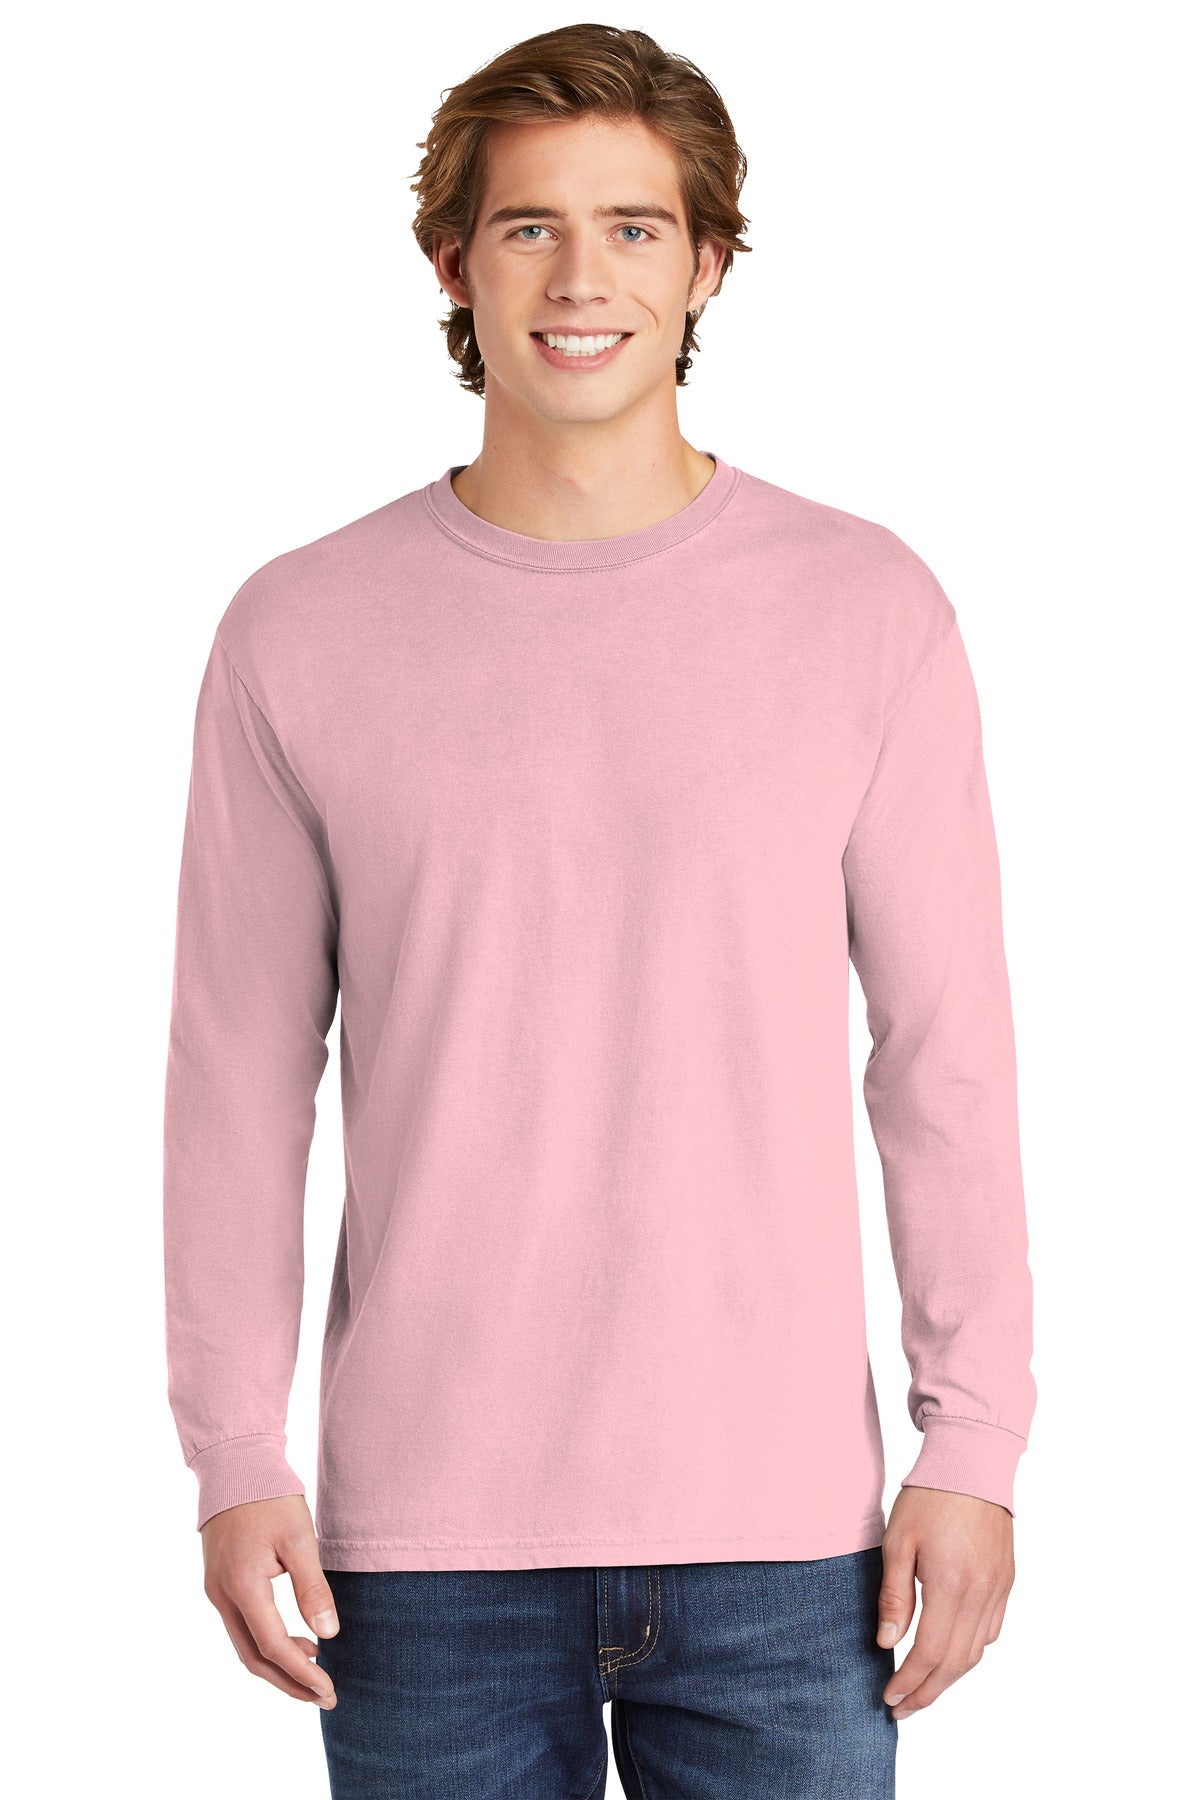 T-Shirts Blossom Comfort Colors